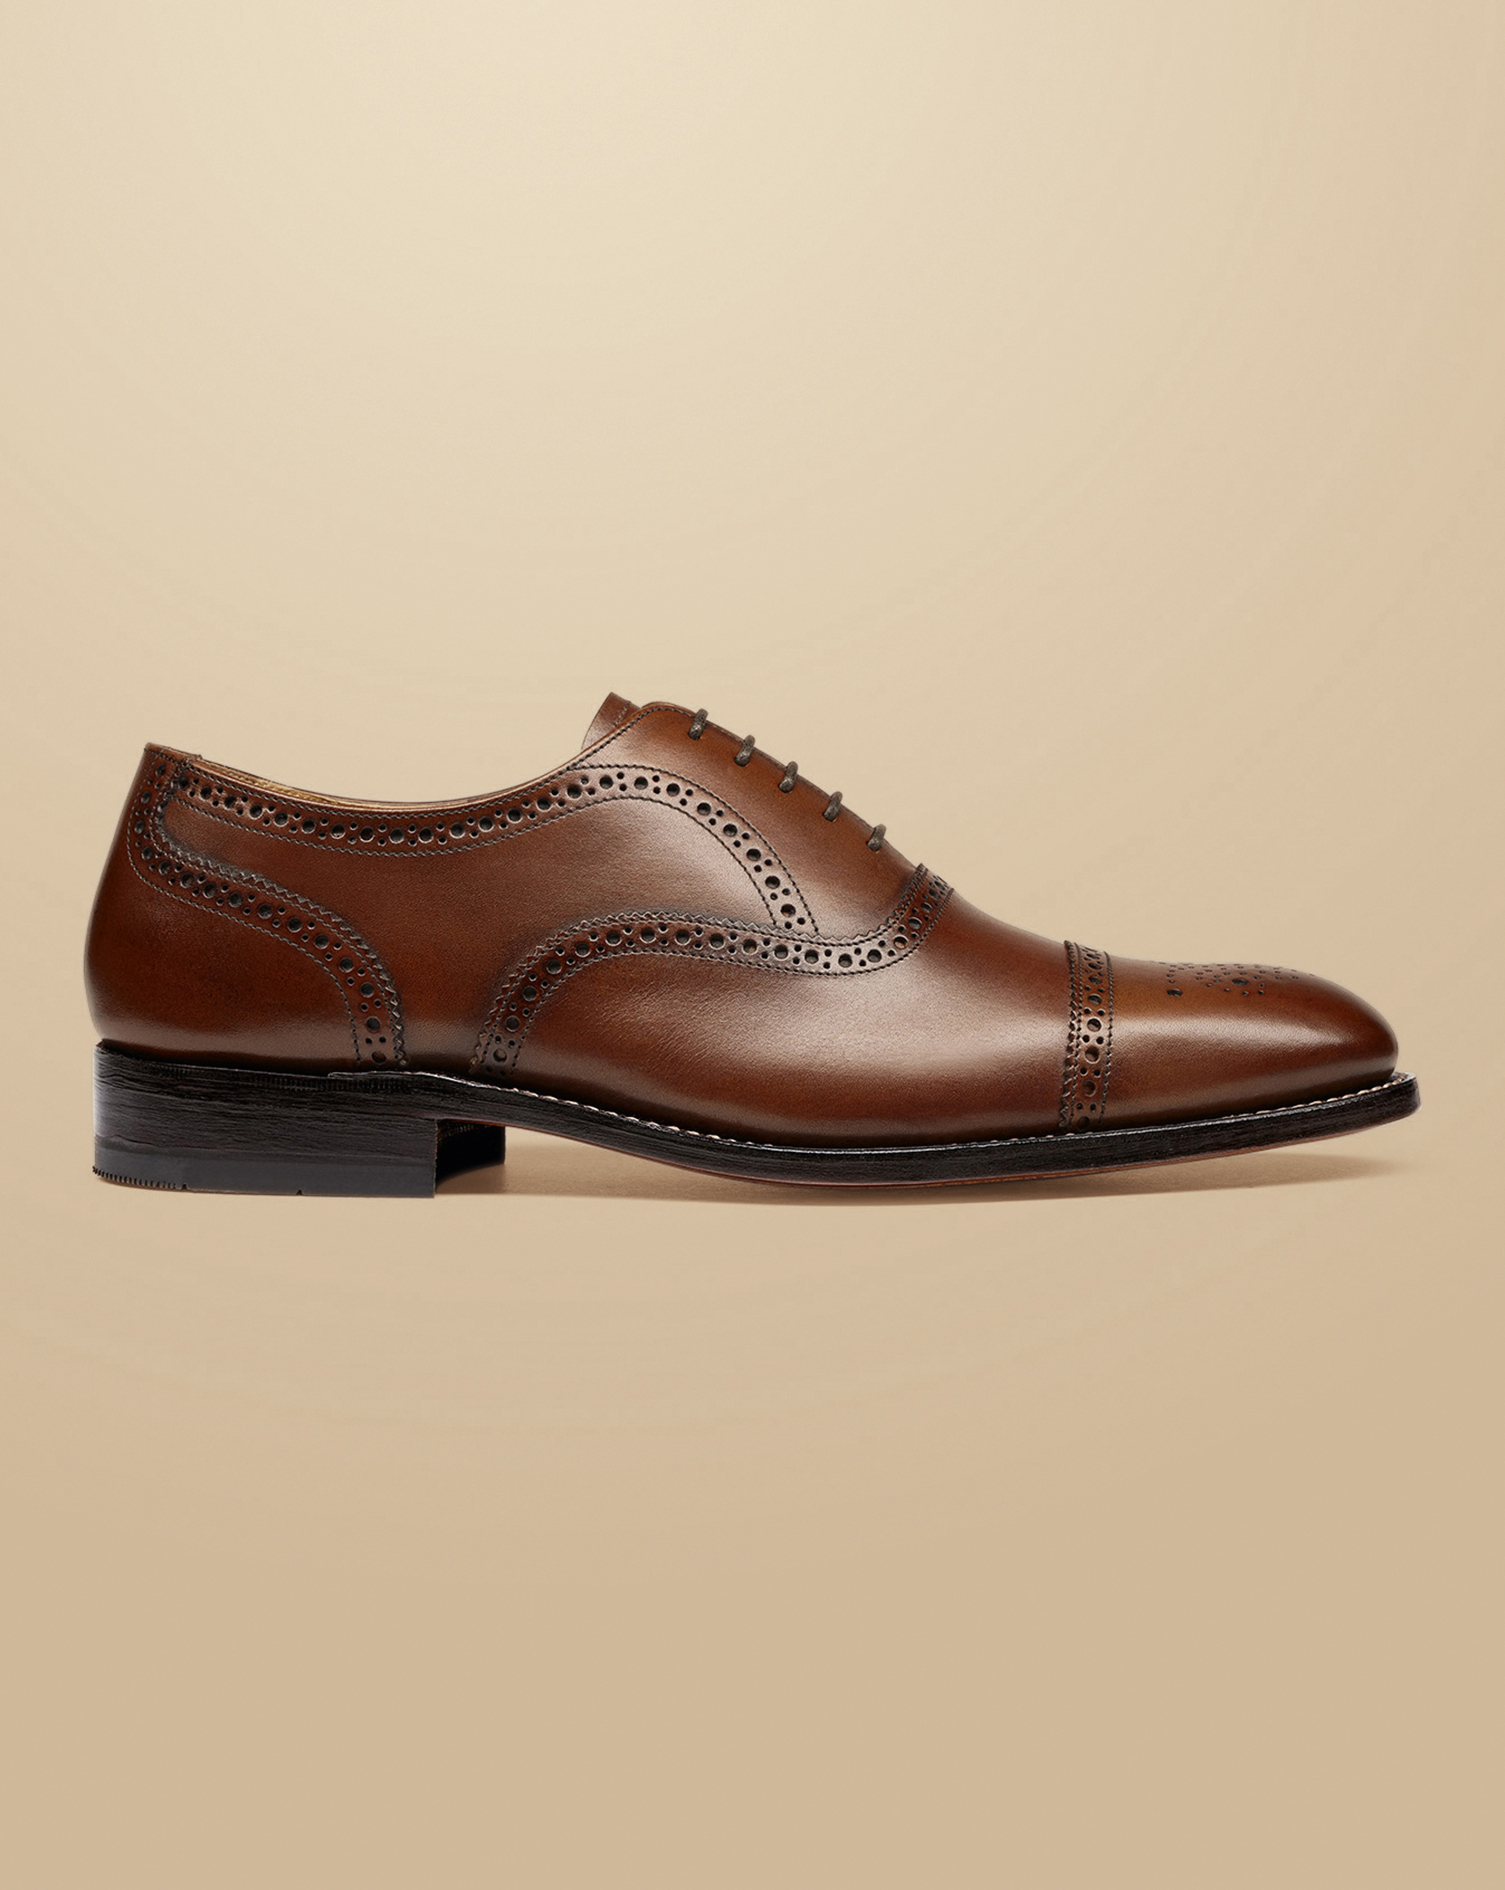 Men's Charles Tyrwhitt Oxford Brogue Shoes - Dark Tan Brown Size 9.5 Leather
